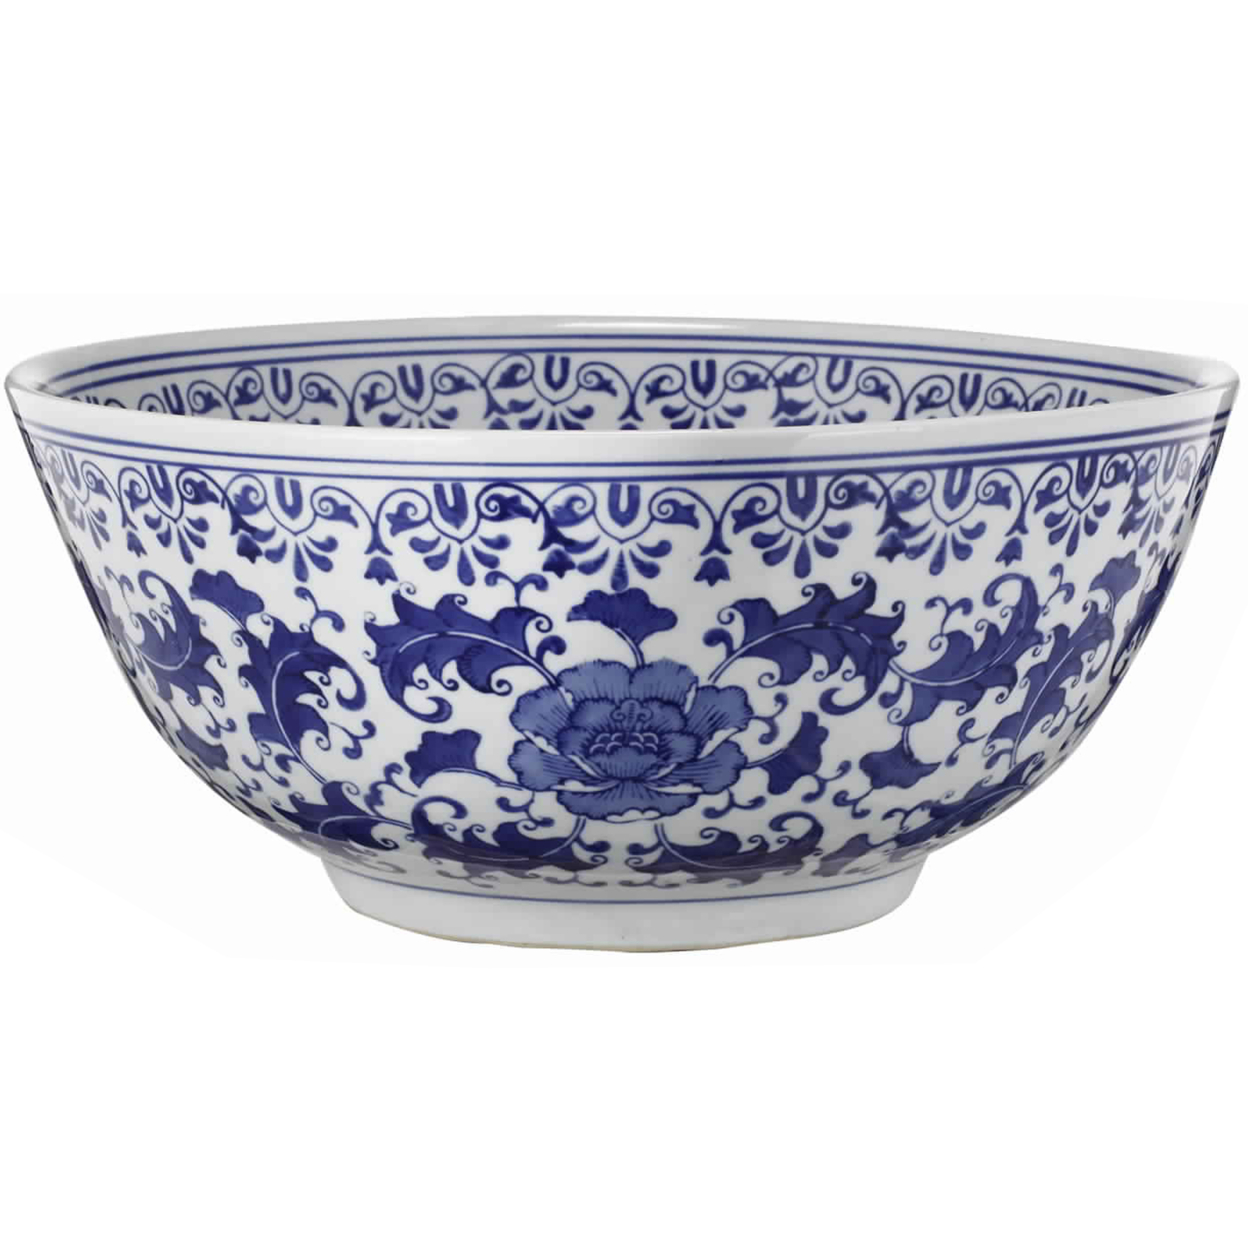 Round Ceramic Bowl With Floral Print, Set Of 2, Blue And White,- Saltoro Sherpi